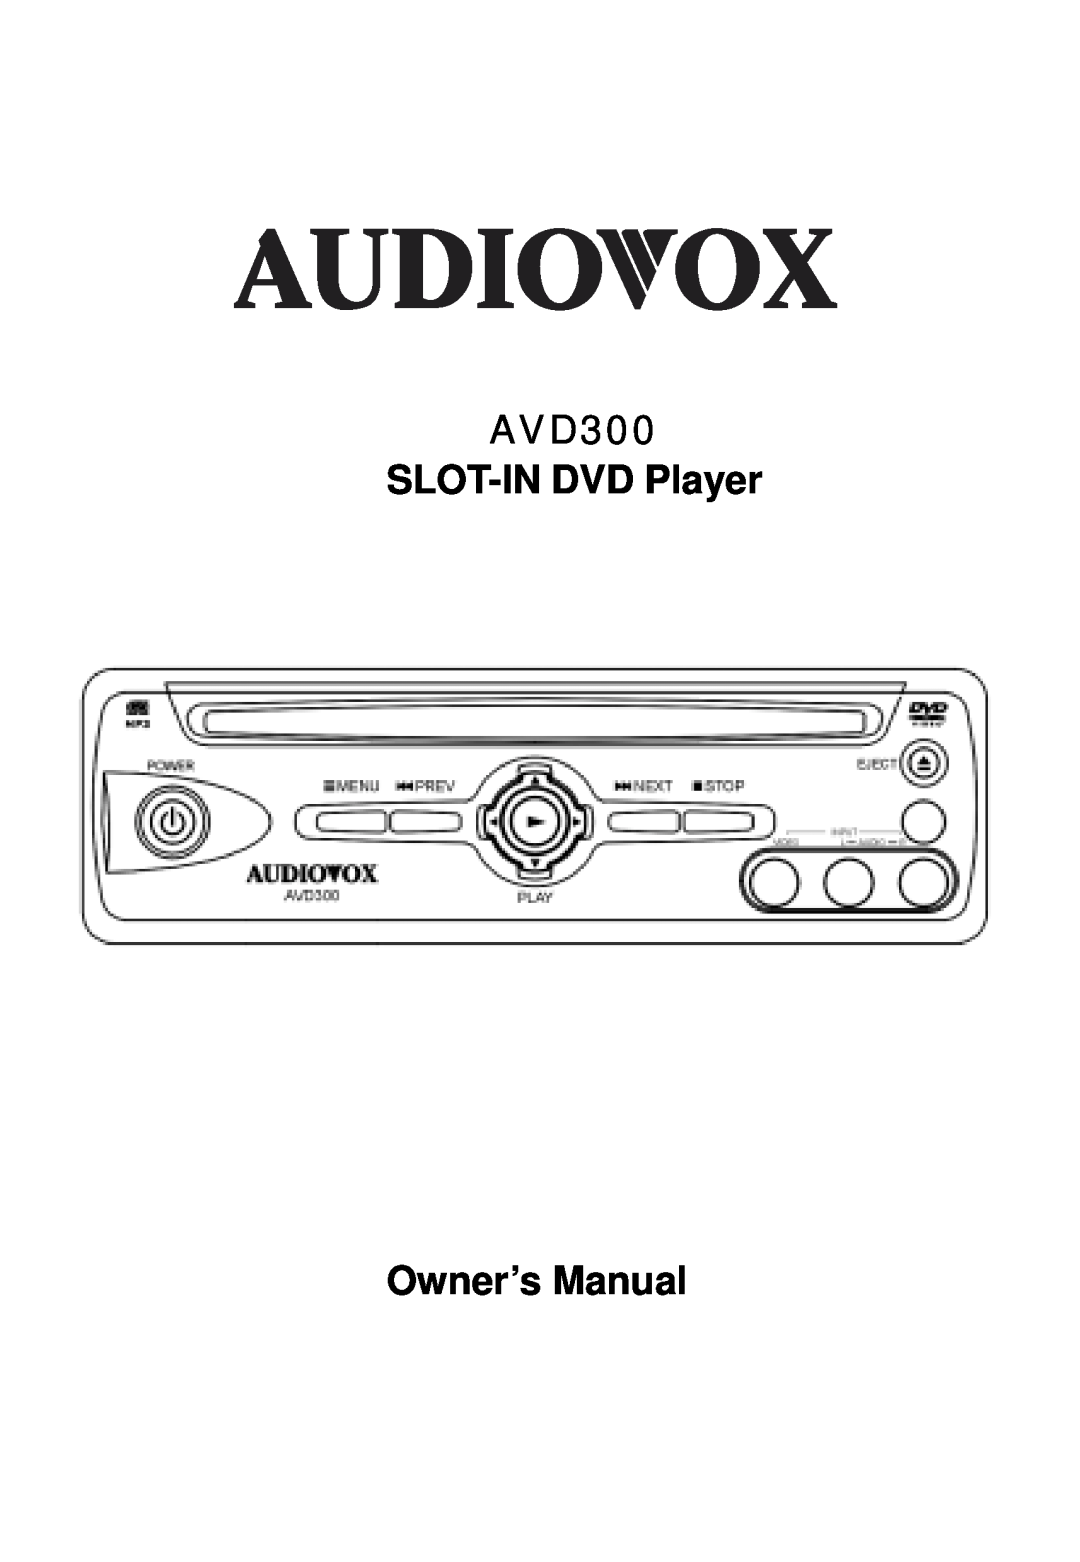 Audiovox owner manual AVD300 SLOT-IN DVD Player 